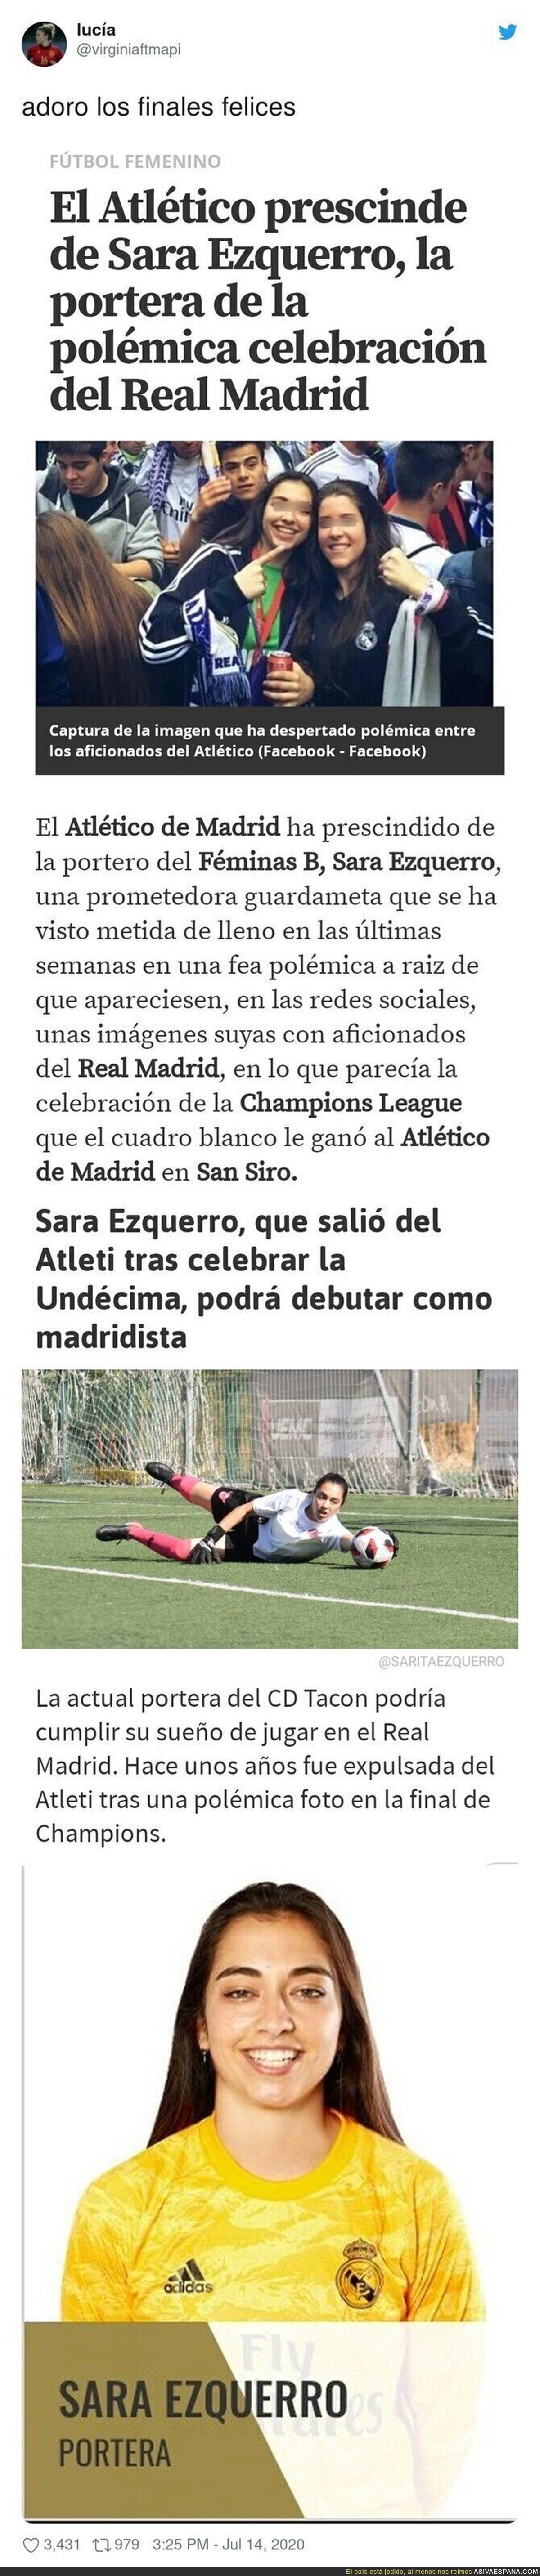 El gran final de la portera Sara Ezquerro del Real Madrid, expulsada del Atlético de Madrid